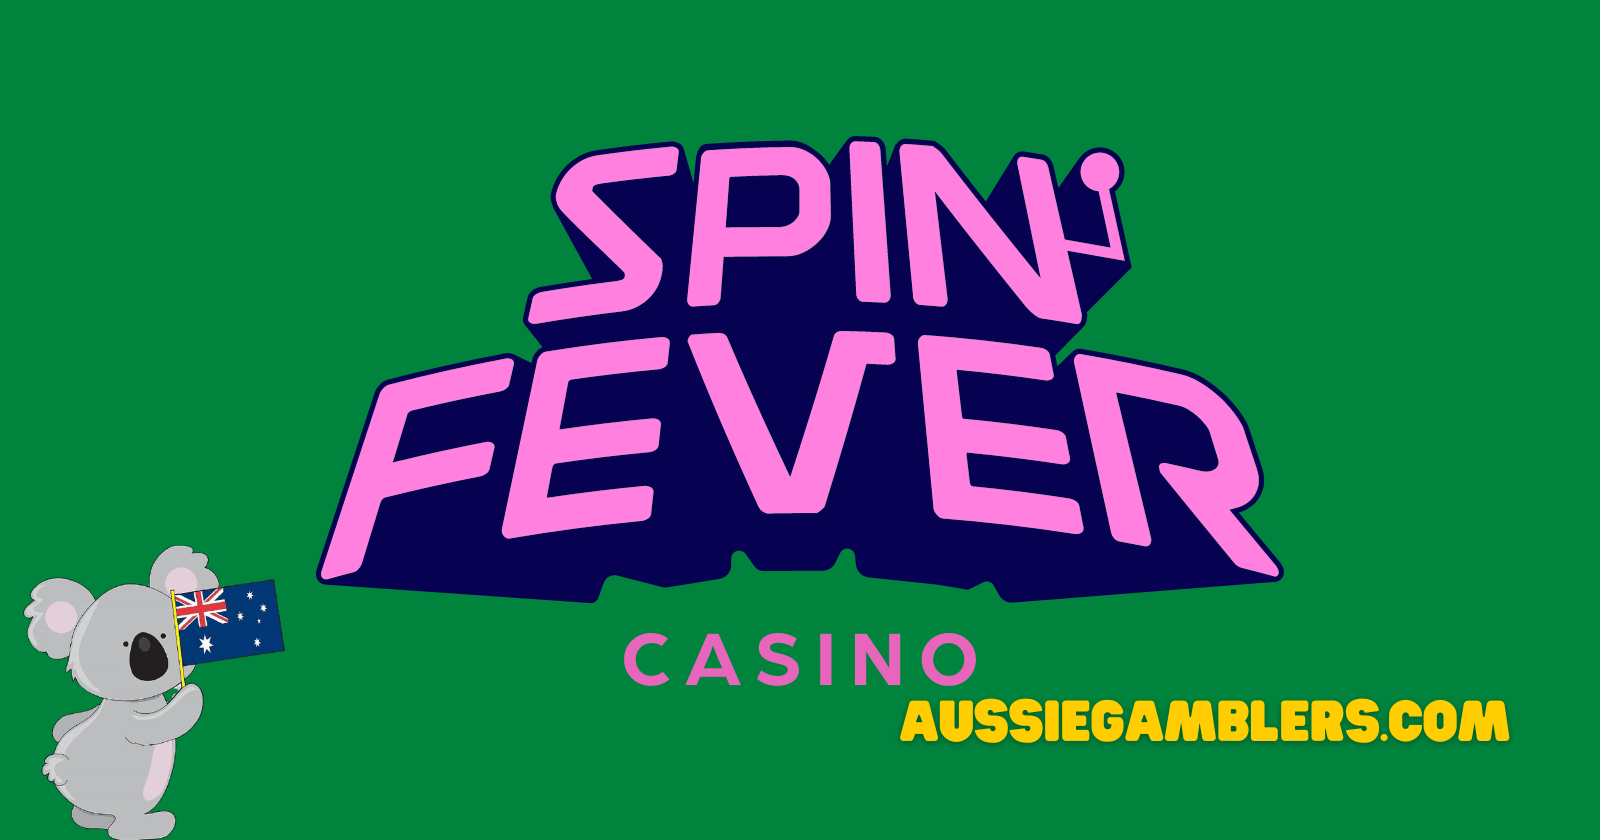 Spinfever casino banner